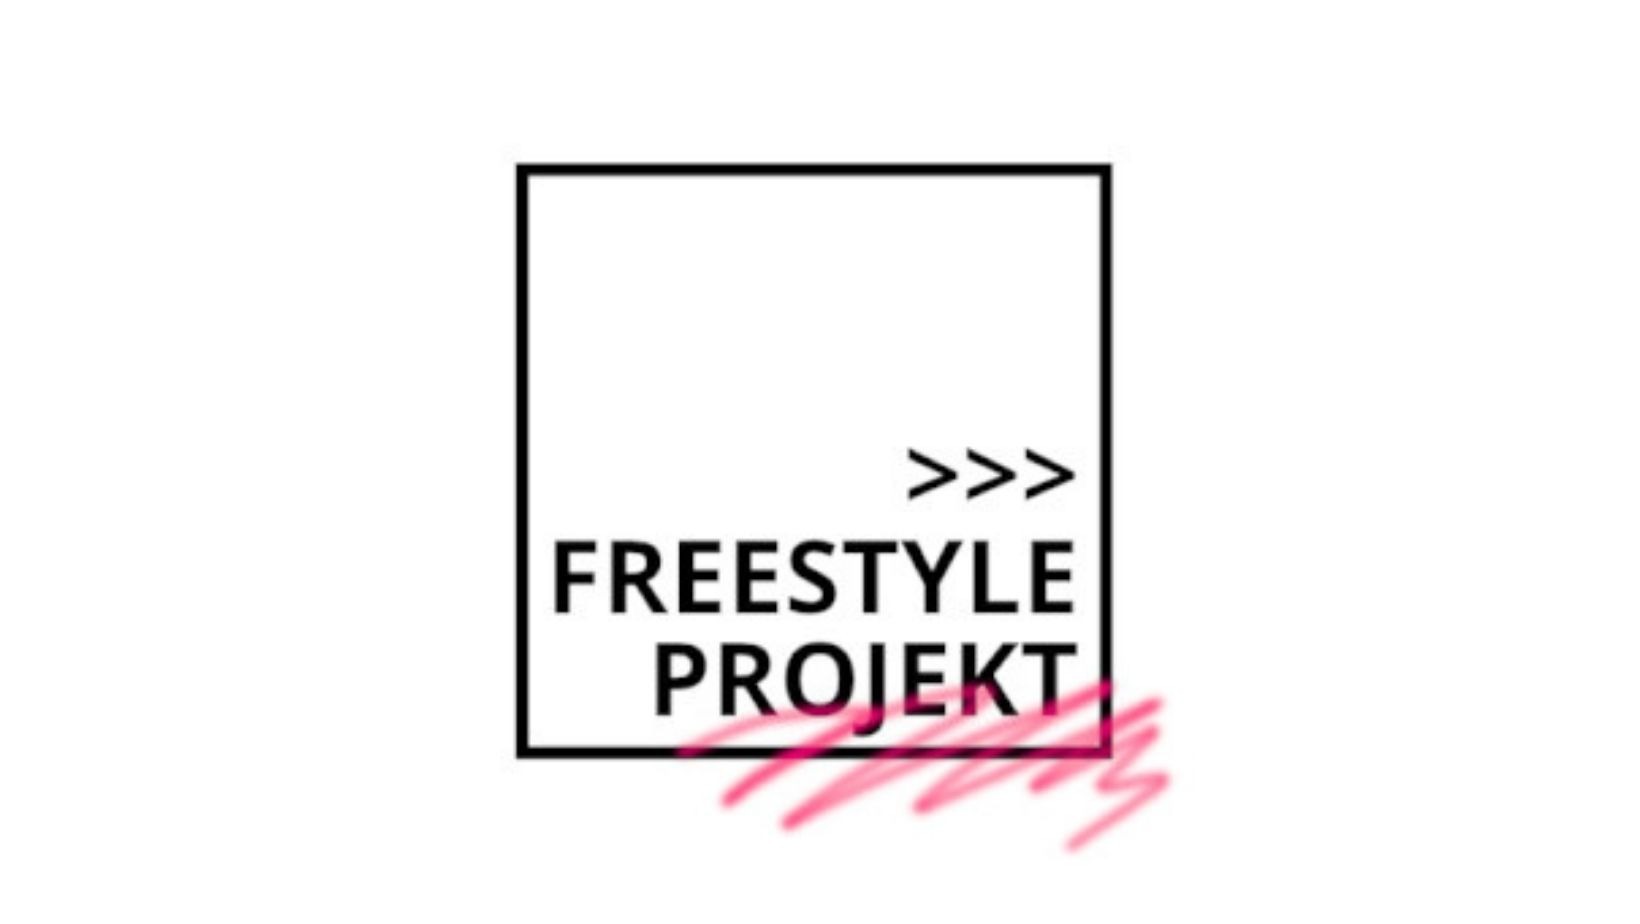 Logo "Freestyle Projekt"